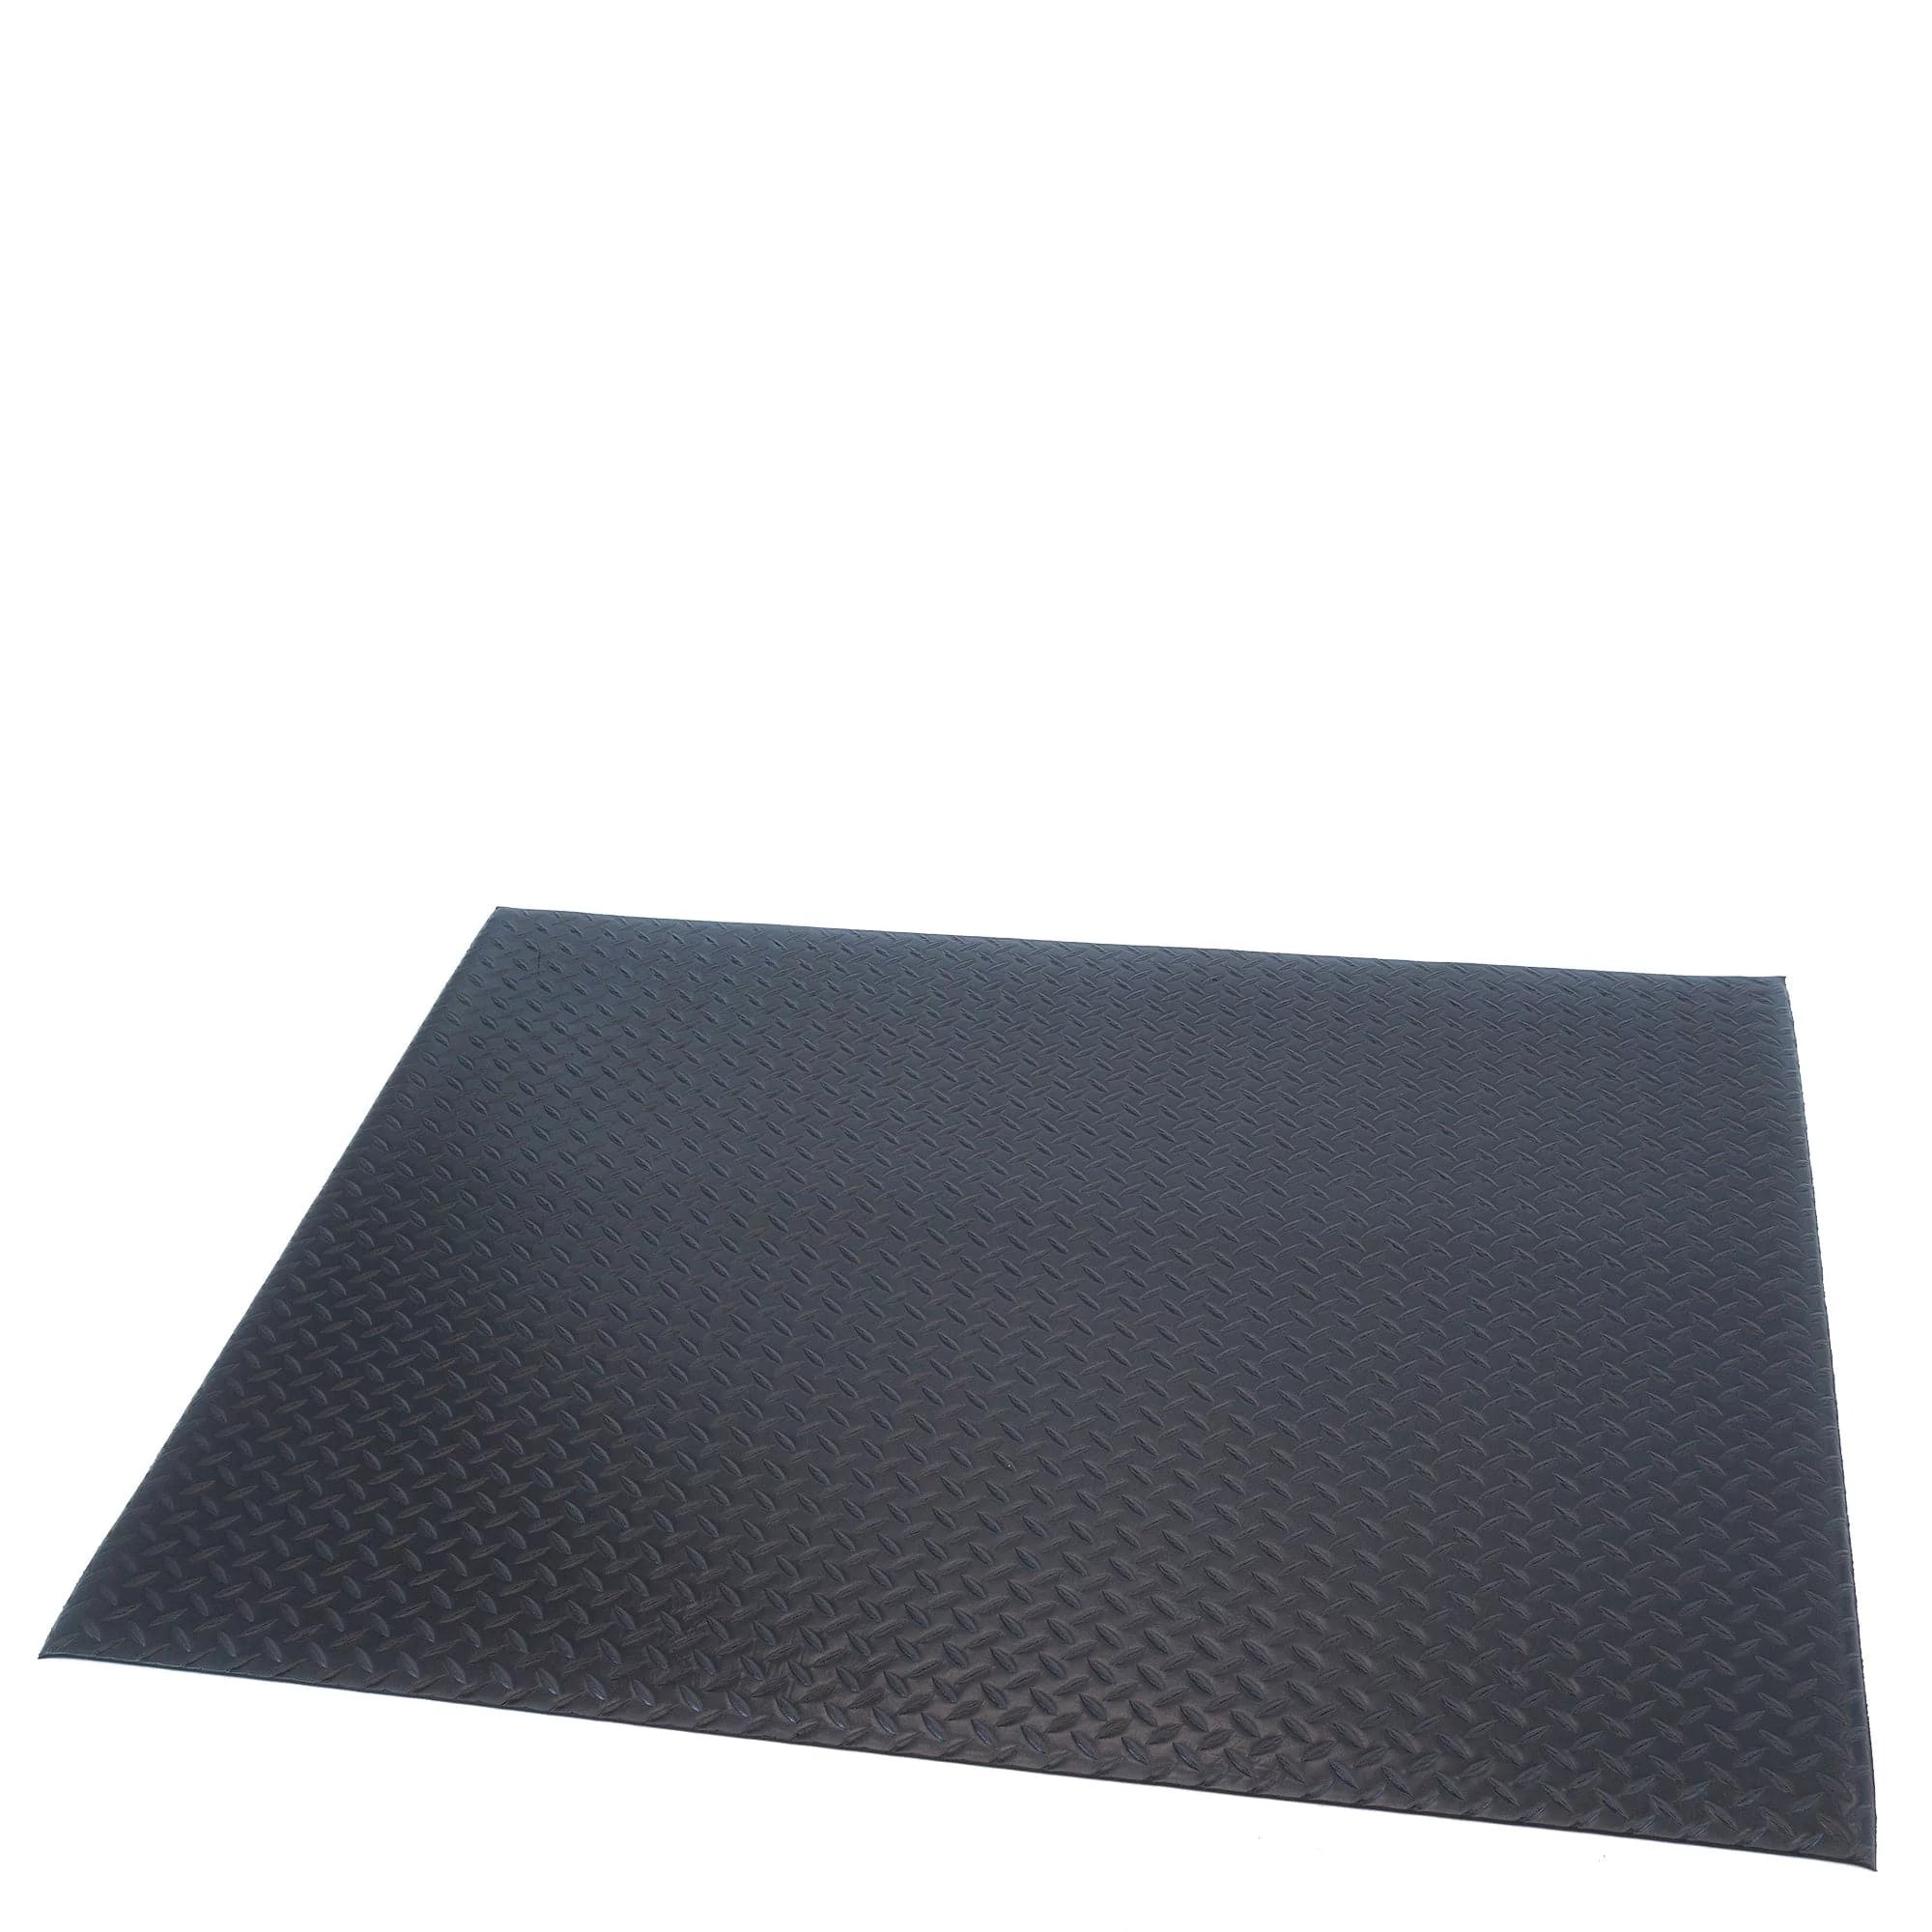 Vinyl PVC Floor Protection Mat